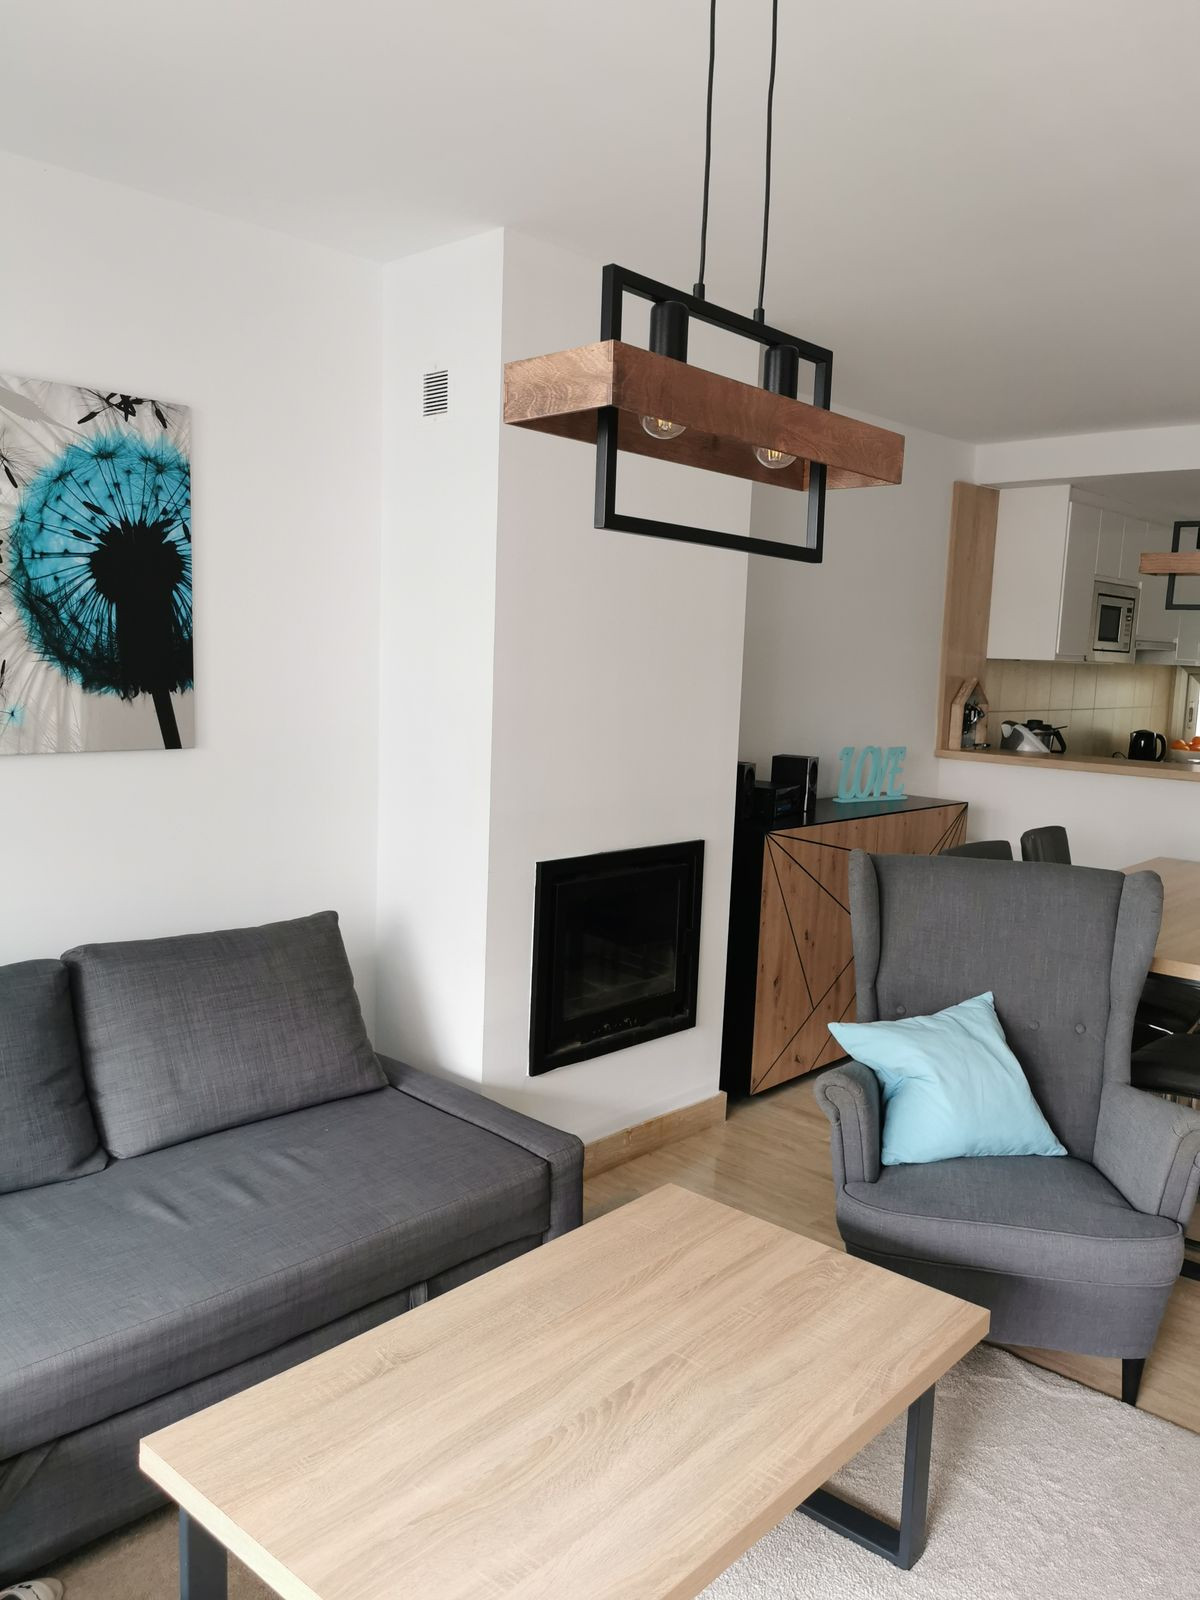 1 bedroom Apartment For Sale in Mijas, Málaga - thumb 10